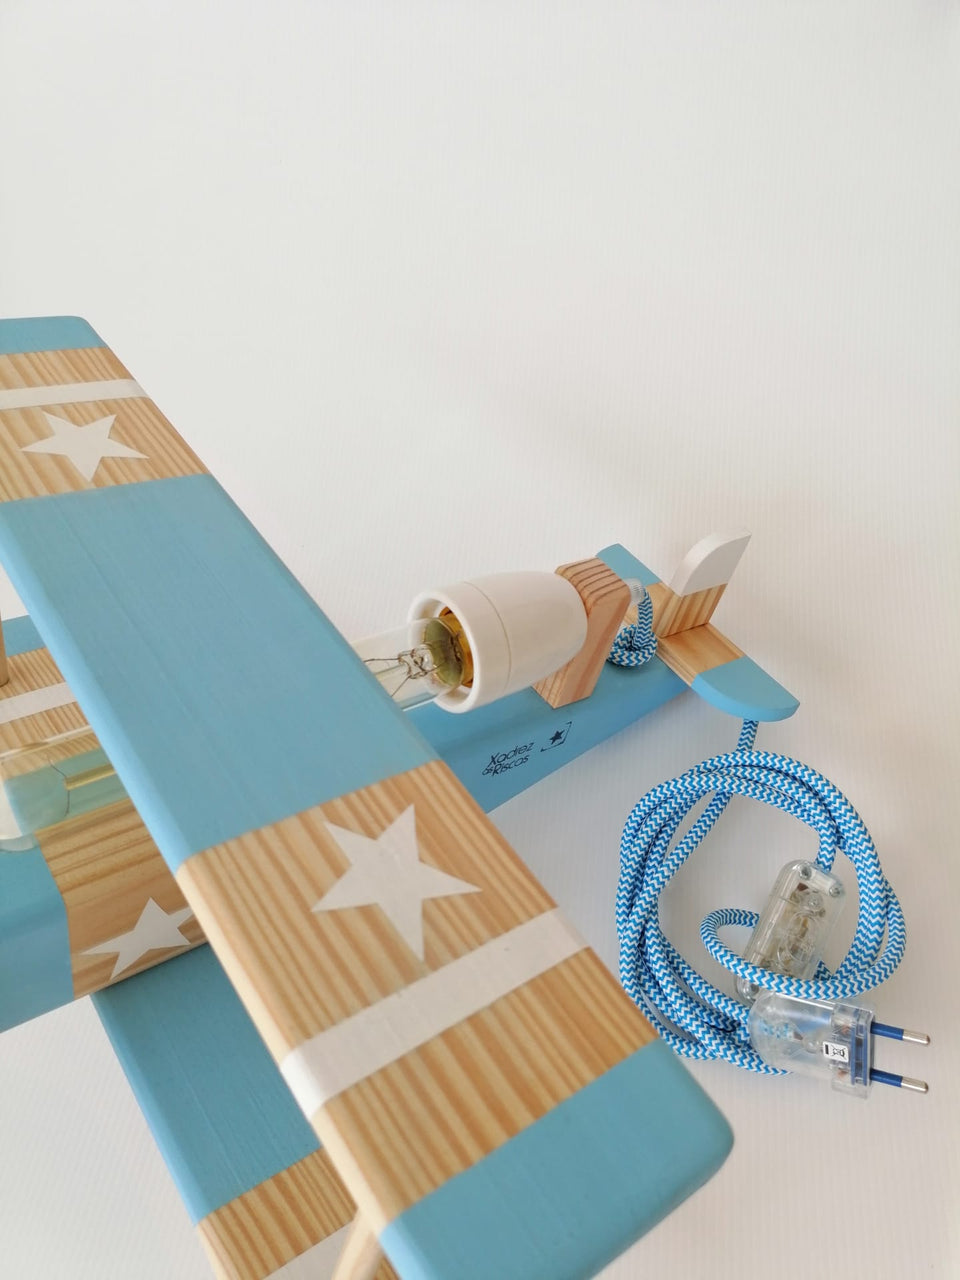 Candeeiro Avião de Mesa Azul bebé - Airplane Table light Lamp baby blue